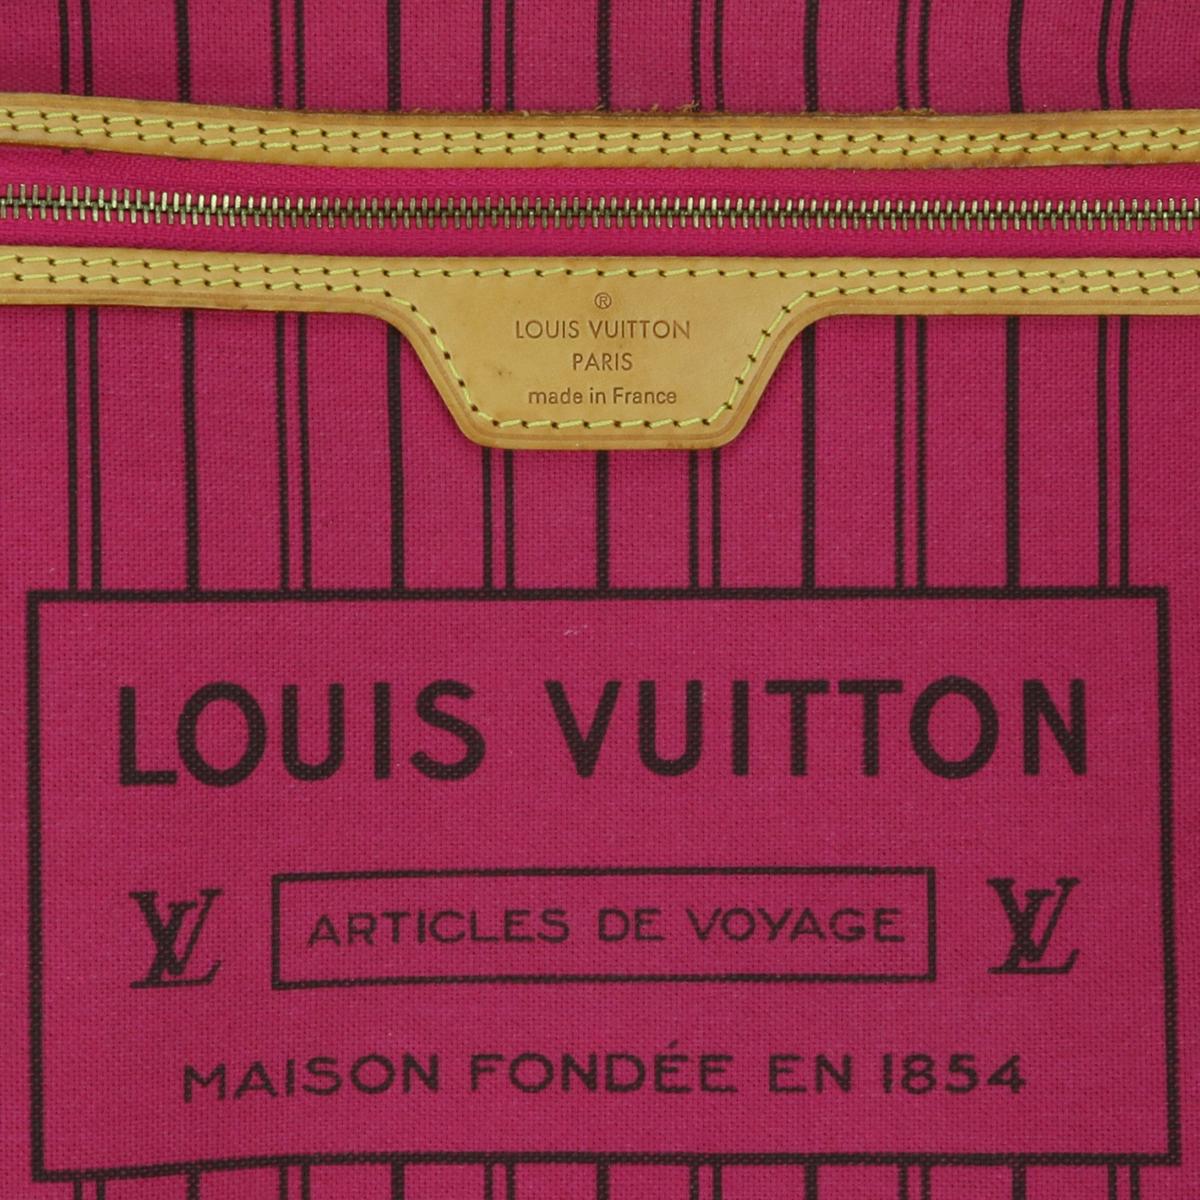 Louis Vuitton Neverfull MM Bag in Monogram with Pivoine Interior 2016 11